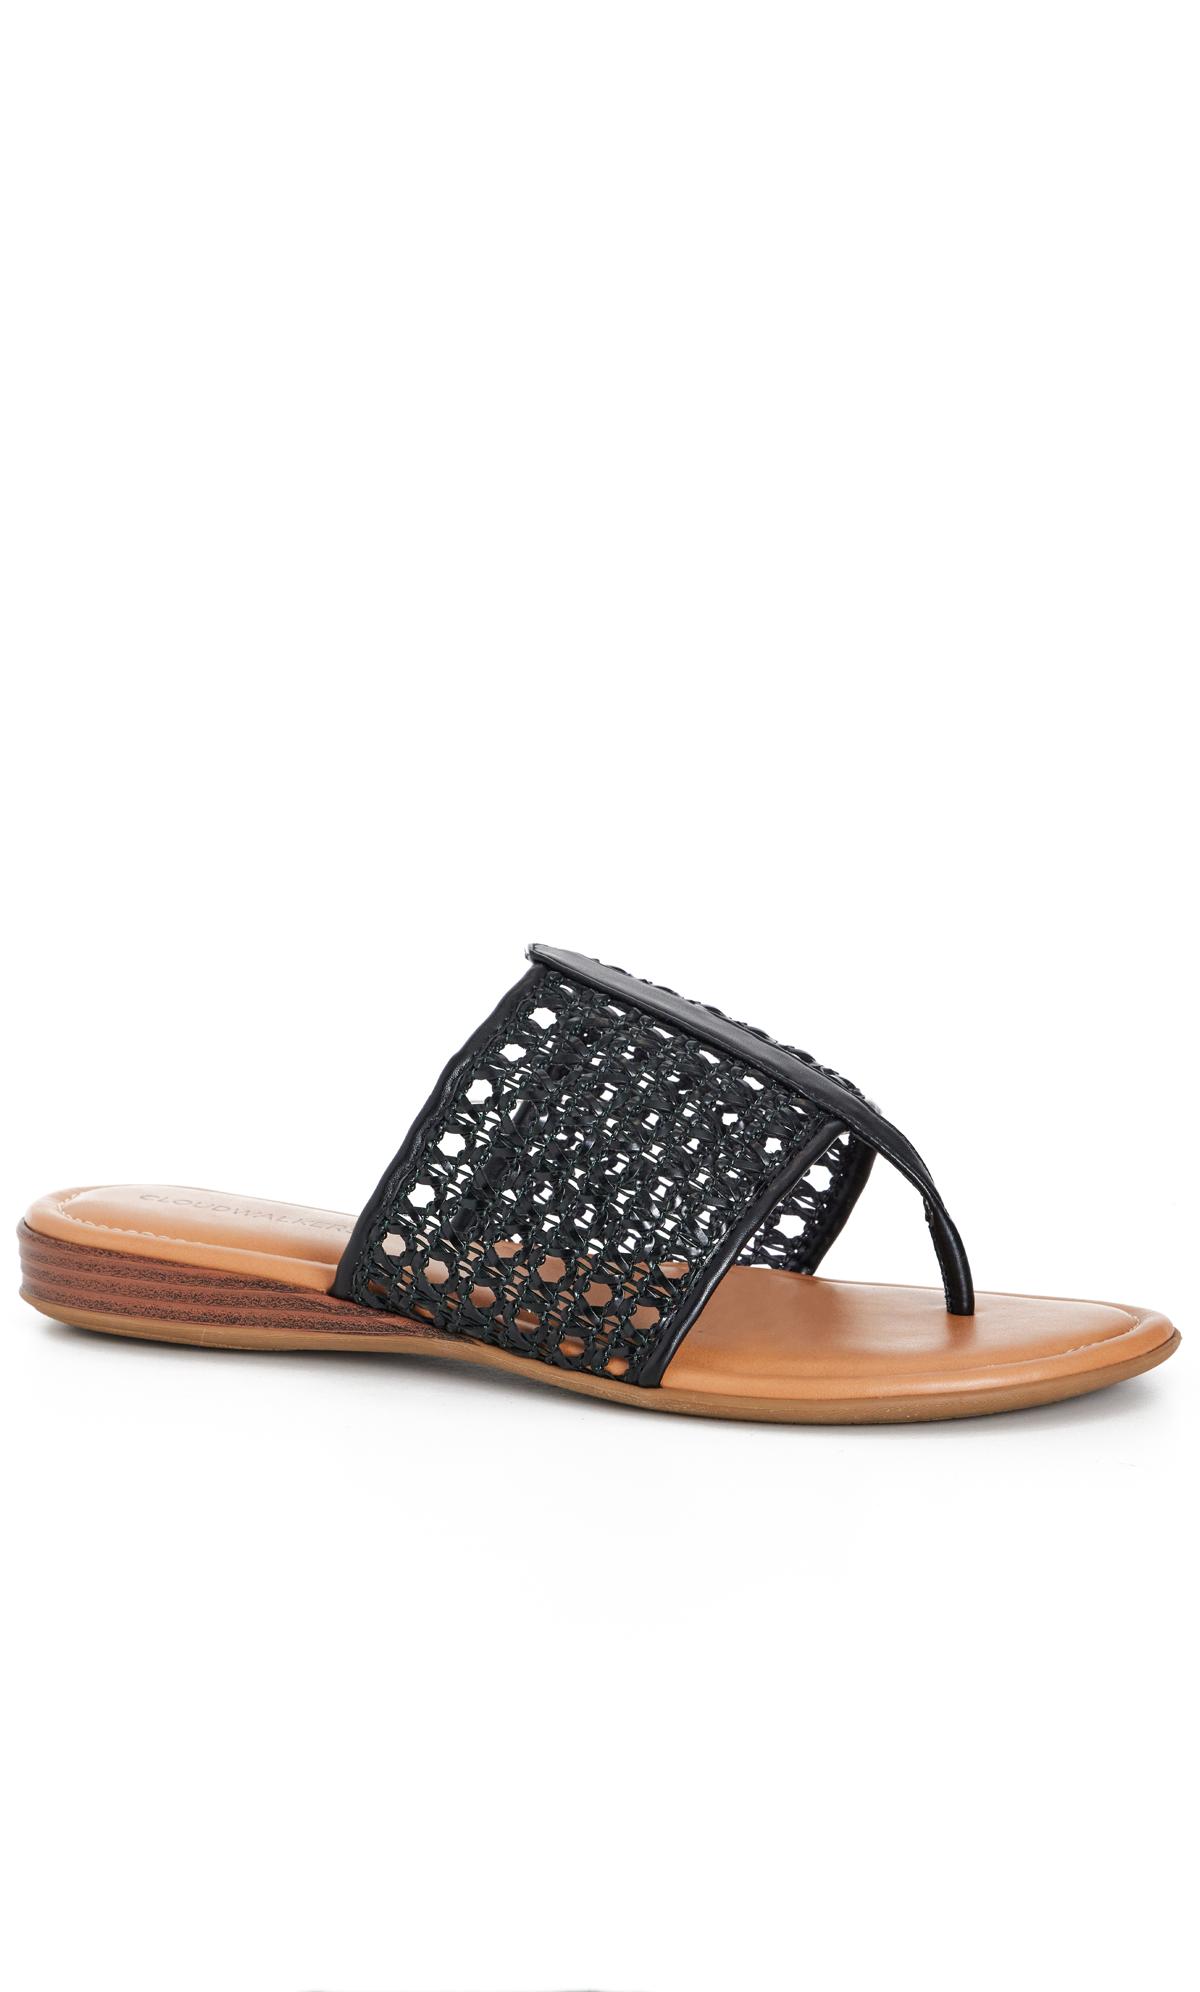 KELSI DAGGER Brooklyn Leather Strap Black Spark Woven Sandals size 5.5 NEW  | eBay